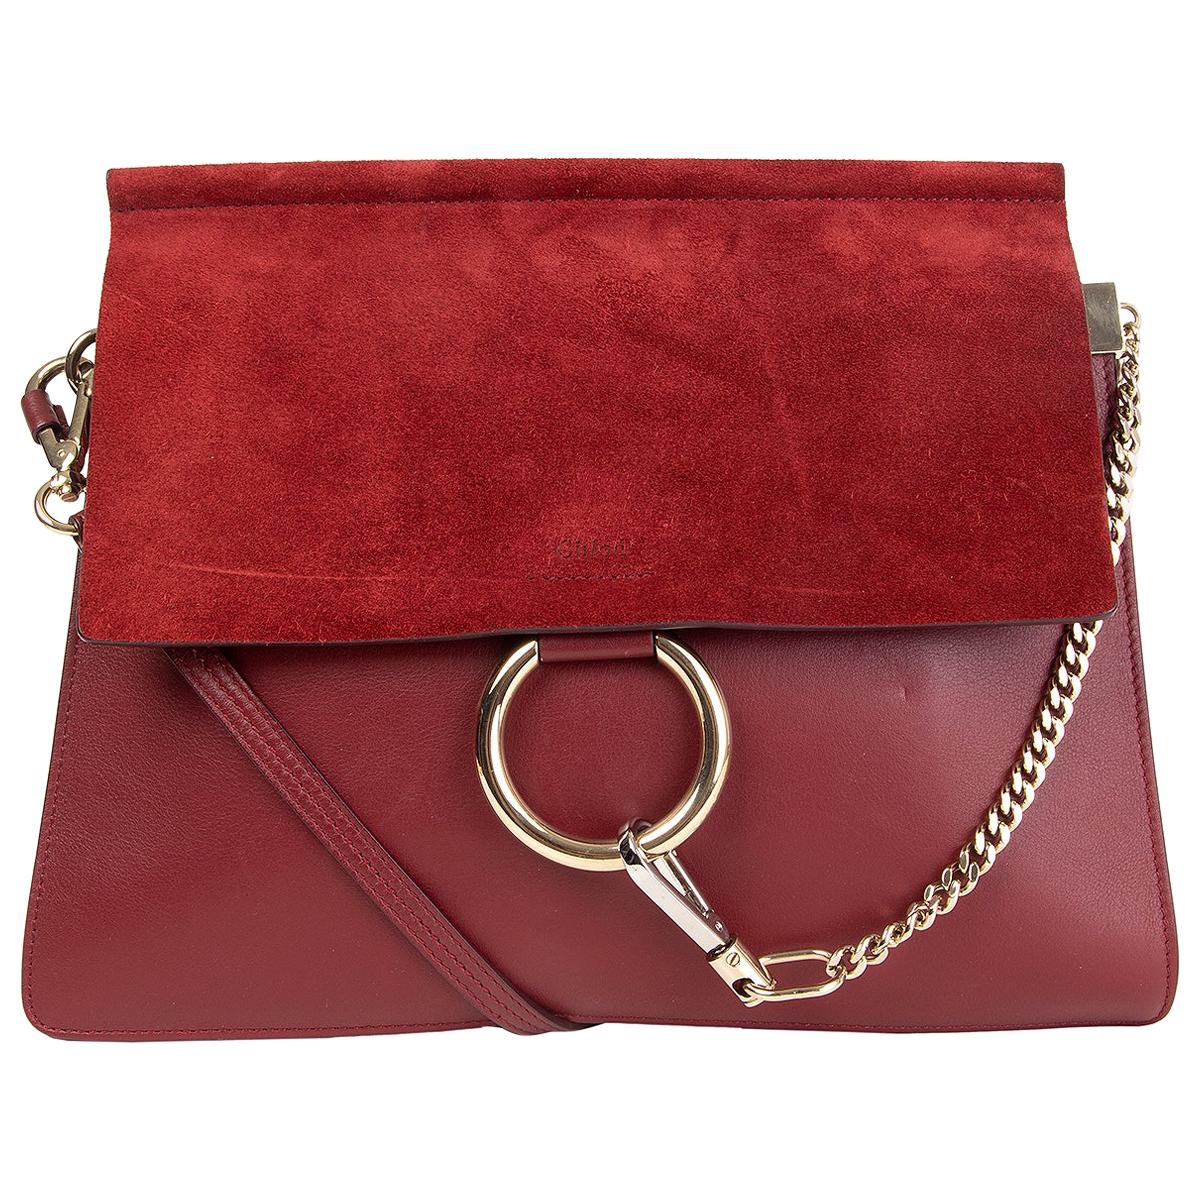 CHLOE burgundy suede & leather FAYE MEDIUM Shoulder Bag